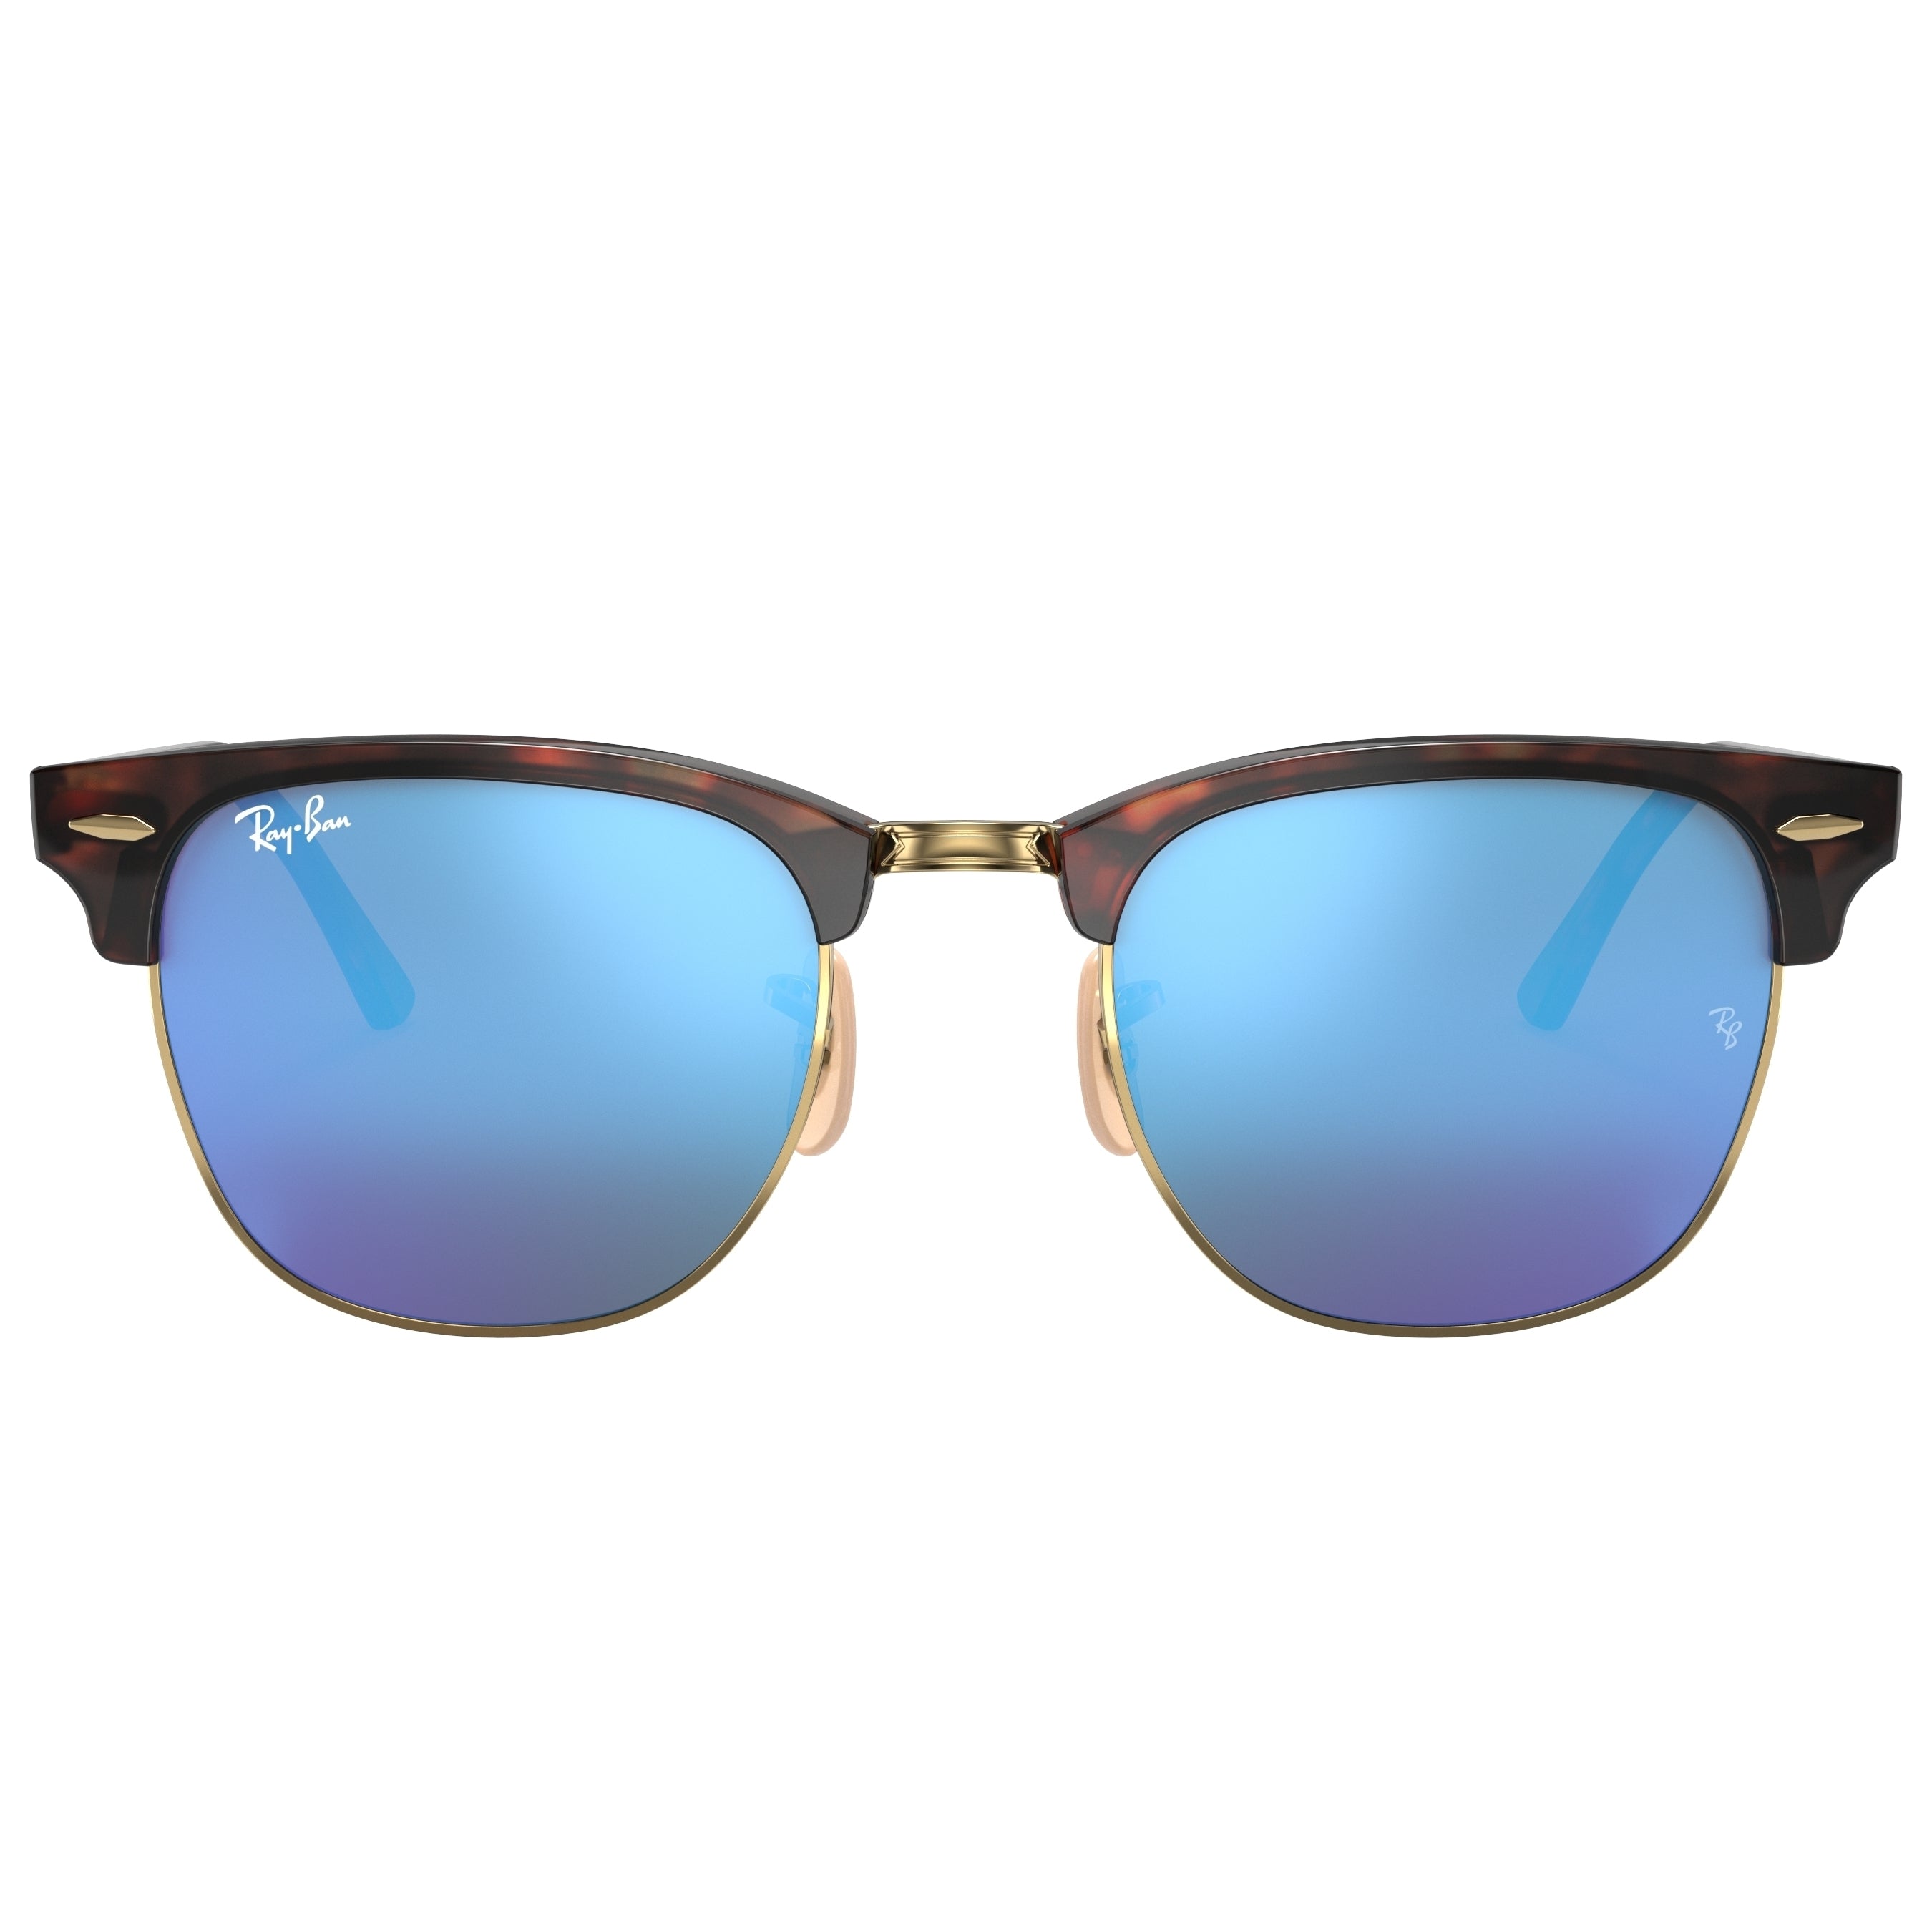 Ray-Ban Clubmaster Flash Lenses Blue Flash Square Unisex Sunglasses RB3016 114517 51